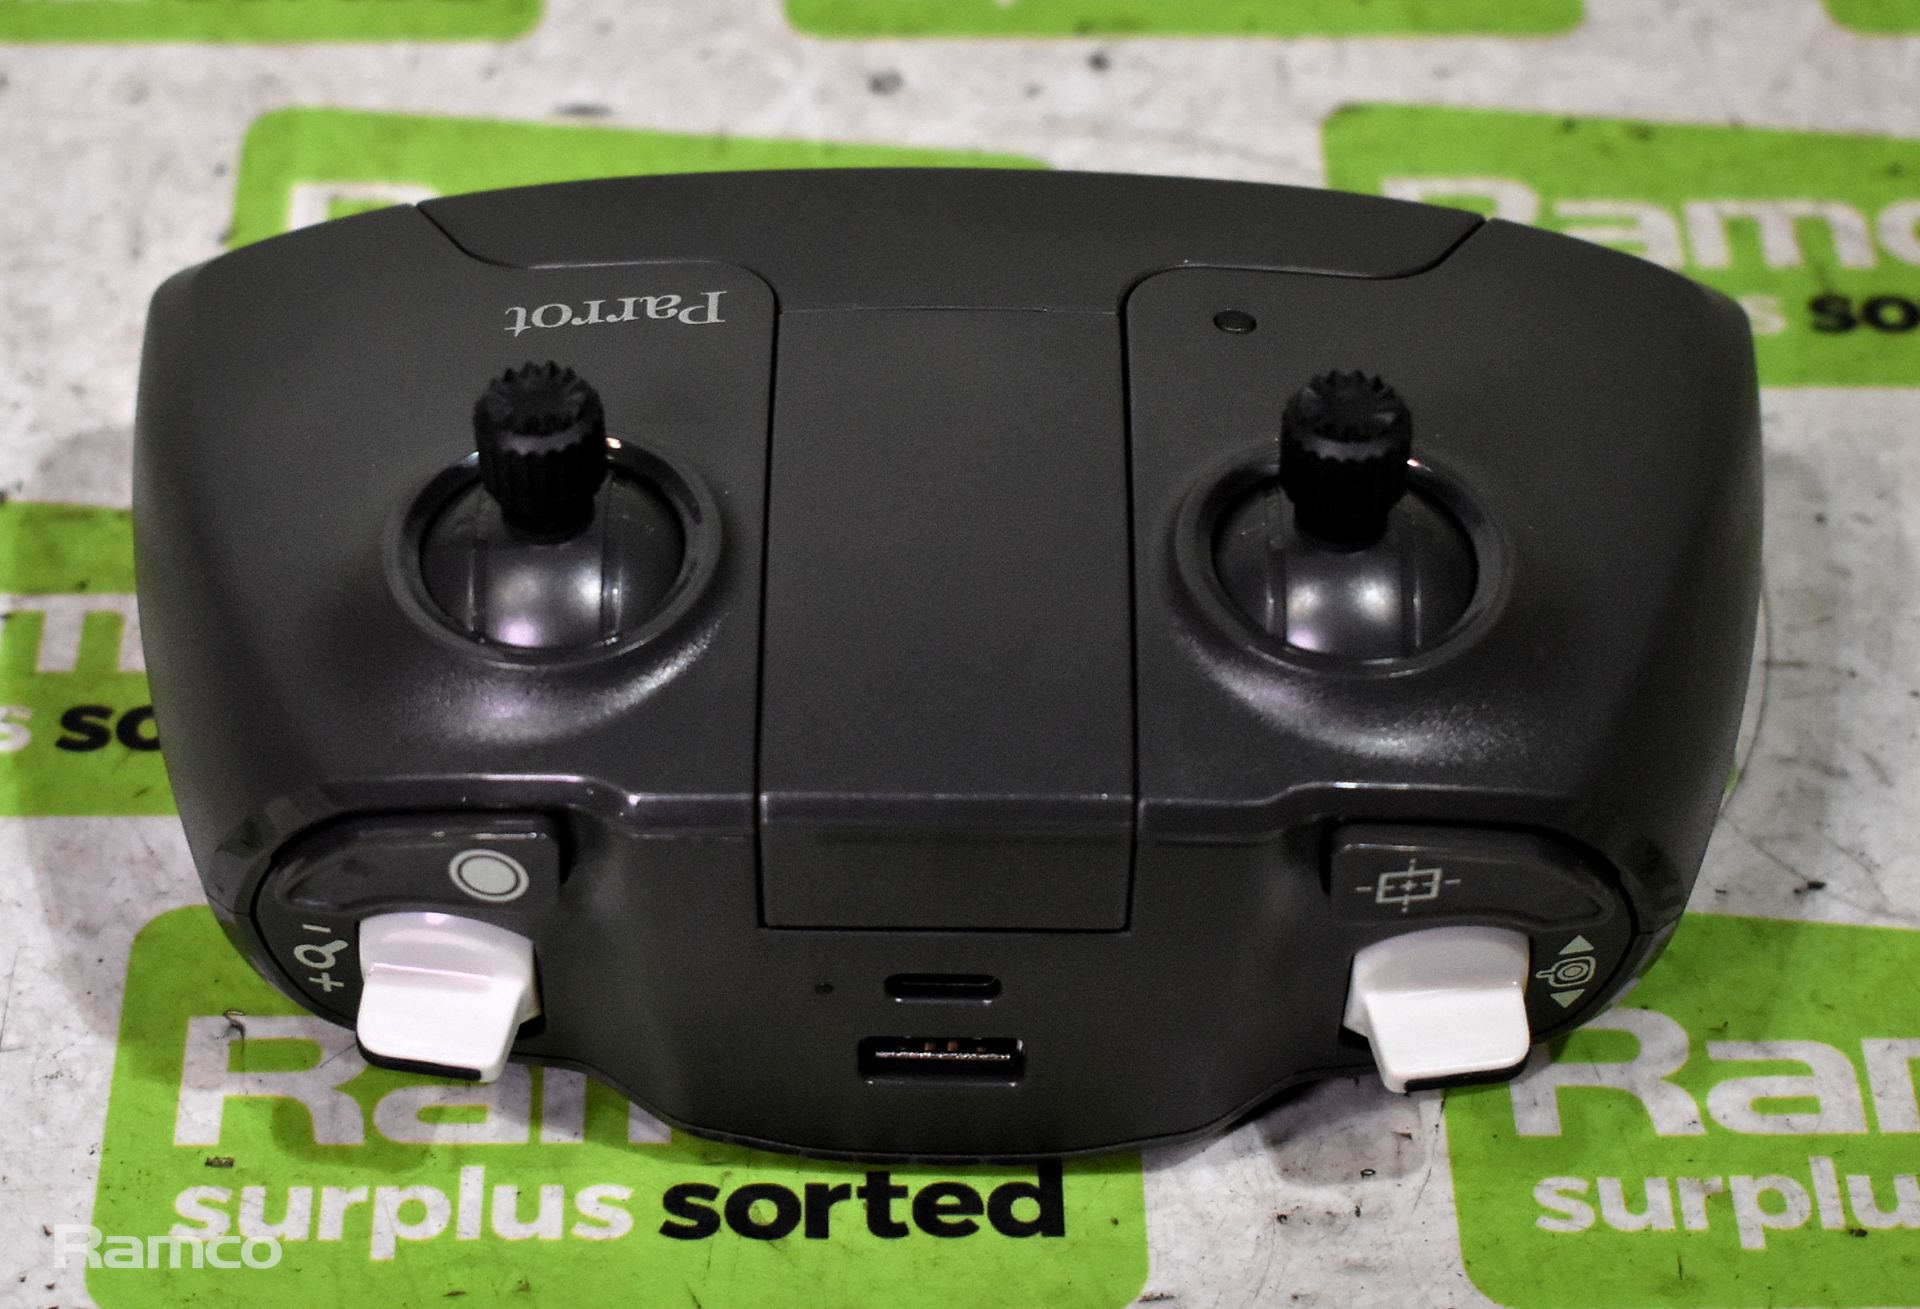 Parrot ANAFI ultra compact 4K HDR camera drone - Parrot SkyController 3 handset - 4x 2700mAh 7.6V - Image 7 of 12